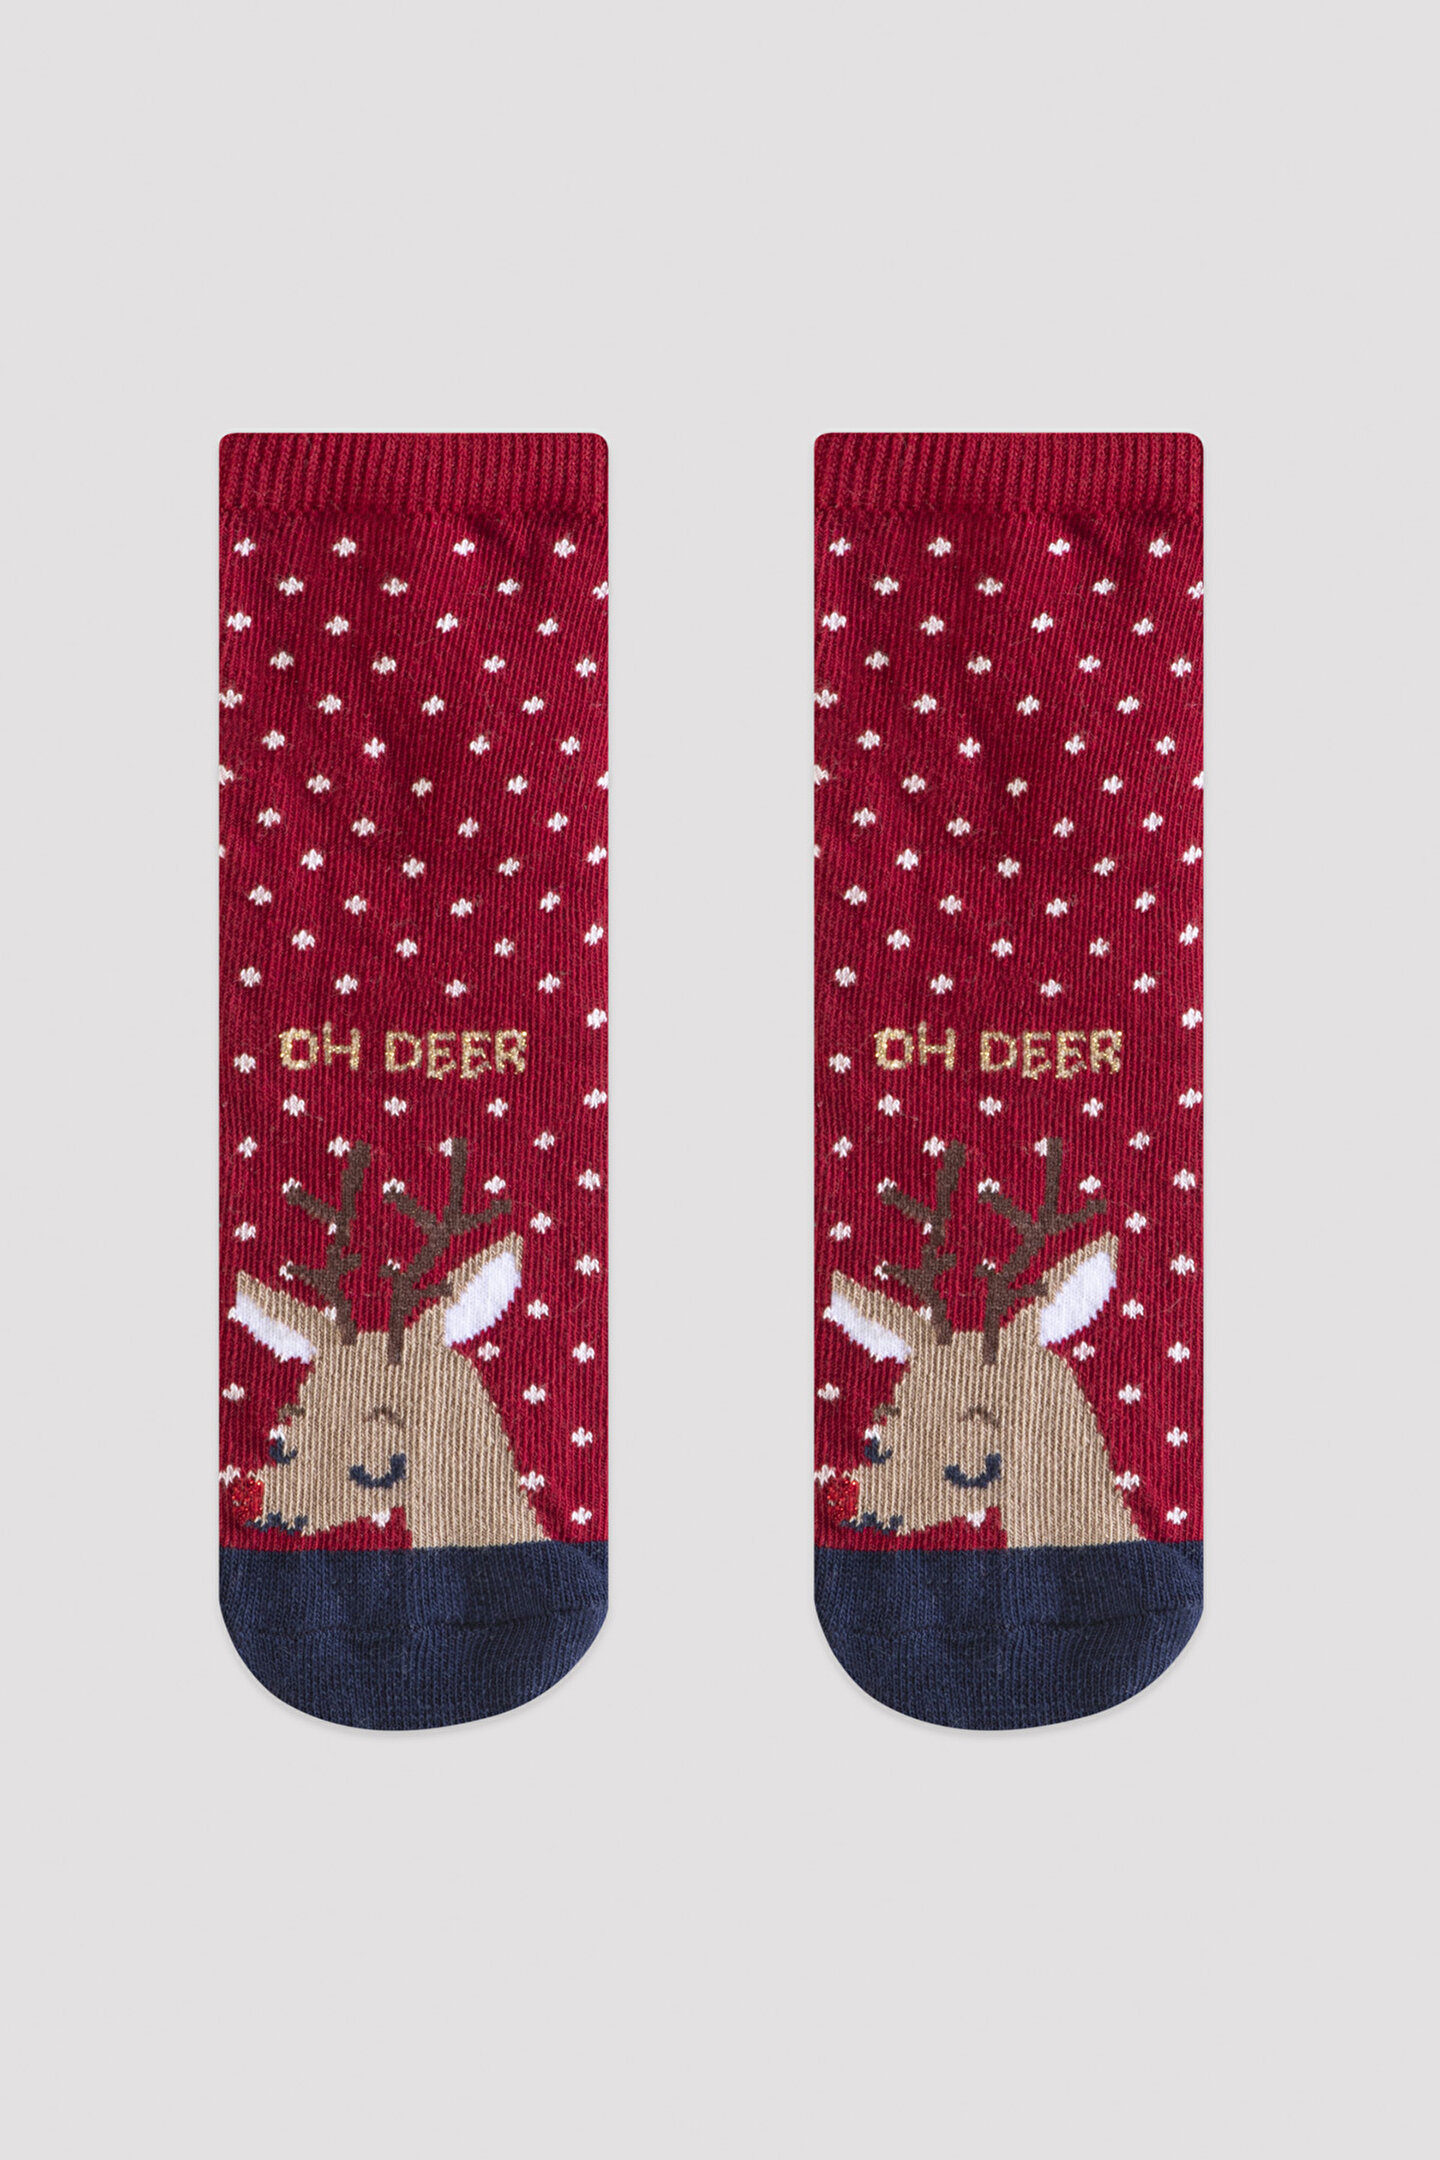 U.Oh Deer Fam  Socks - 1